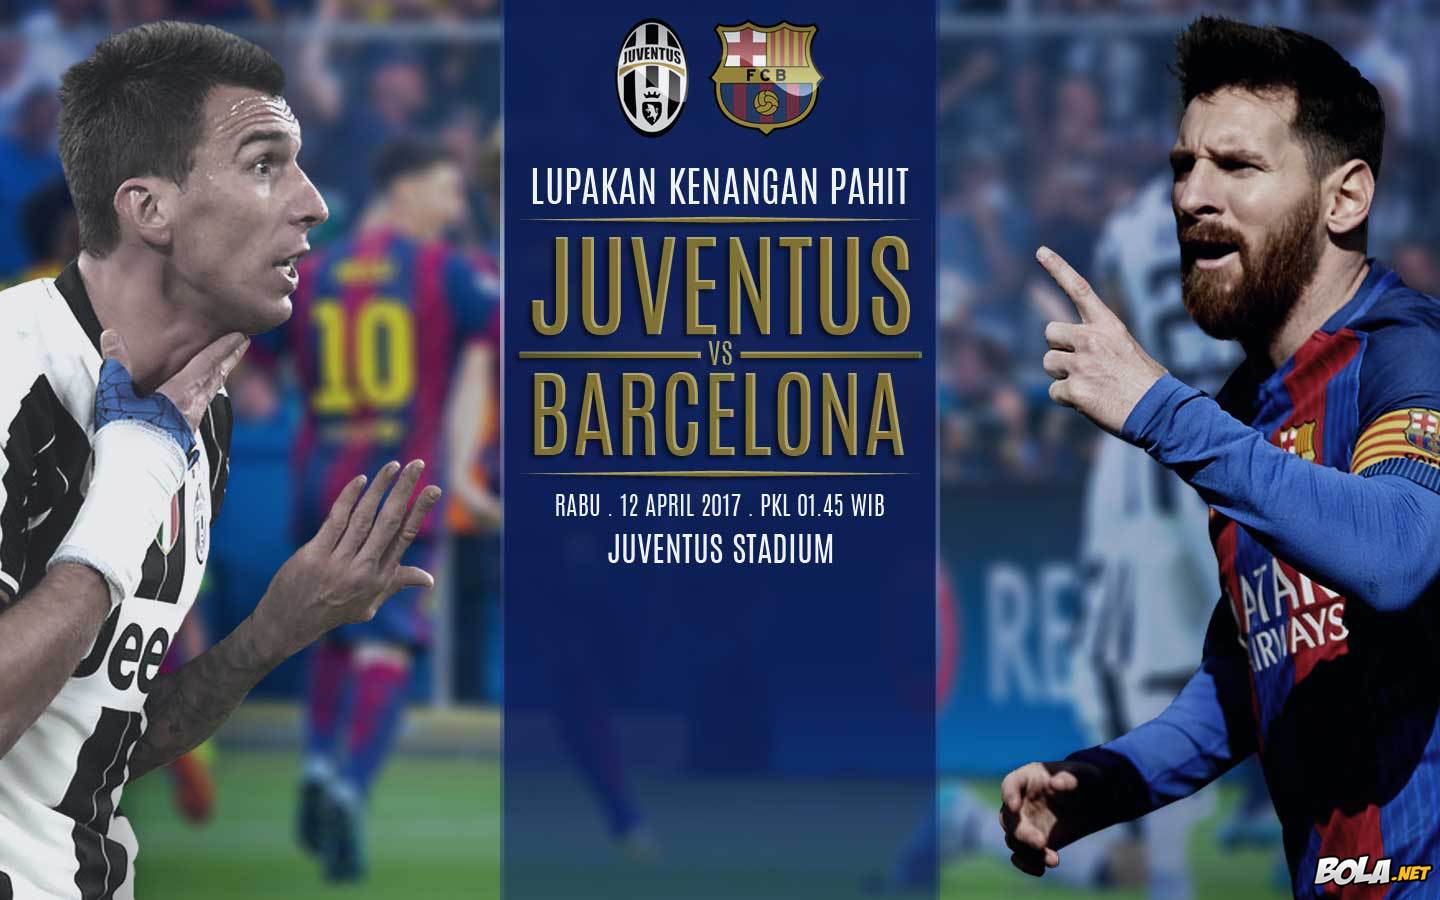 Deskripsi : Wallpaper Juventus Vs Barcelona, size: 1440x900